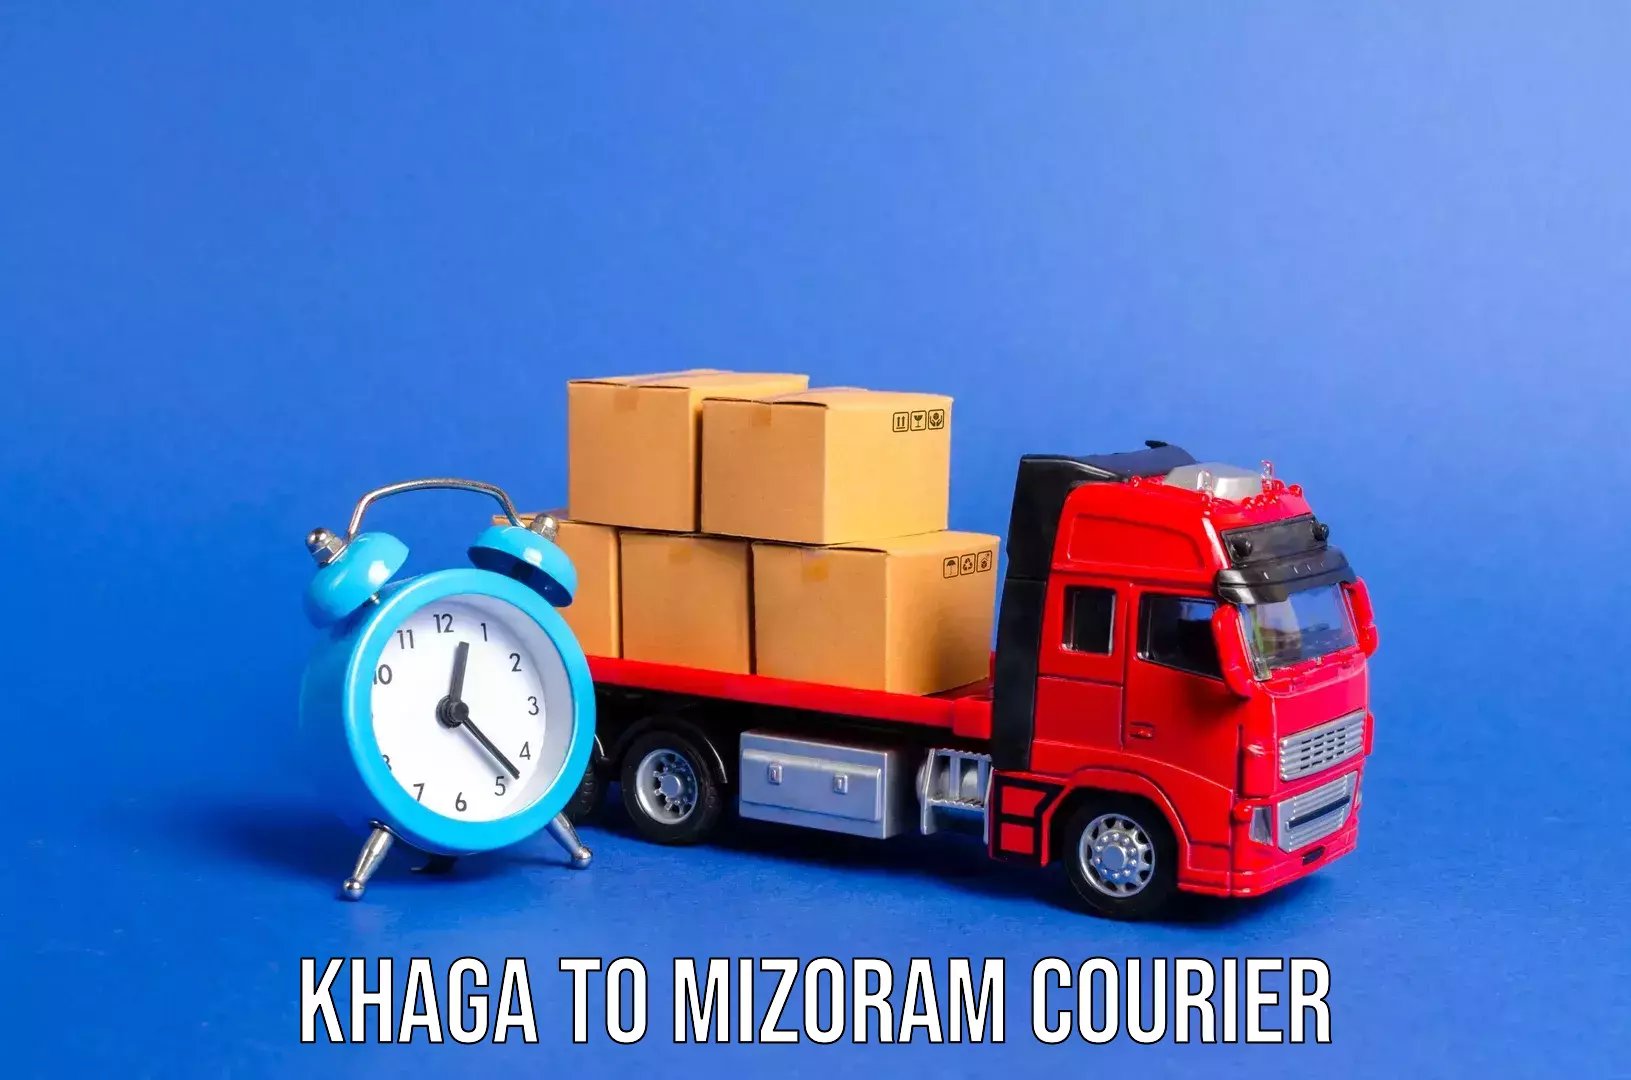 Overnight luggage courier Khaga to Mizoram